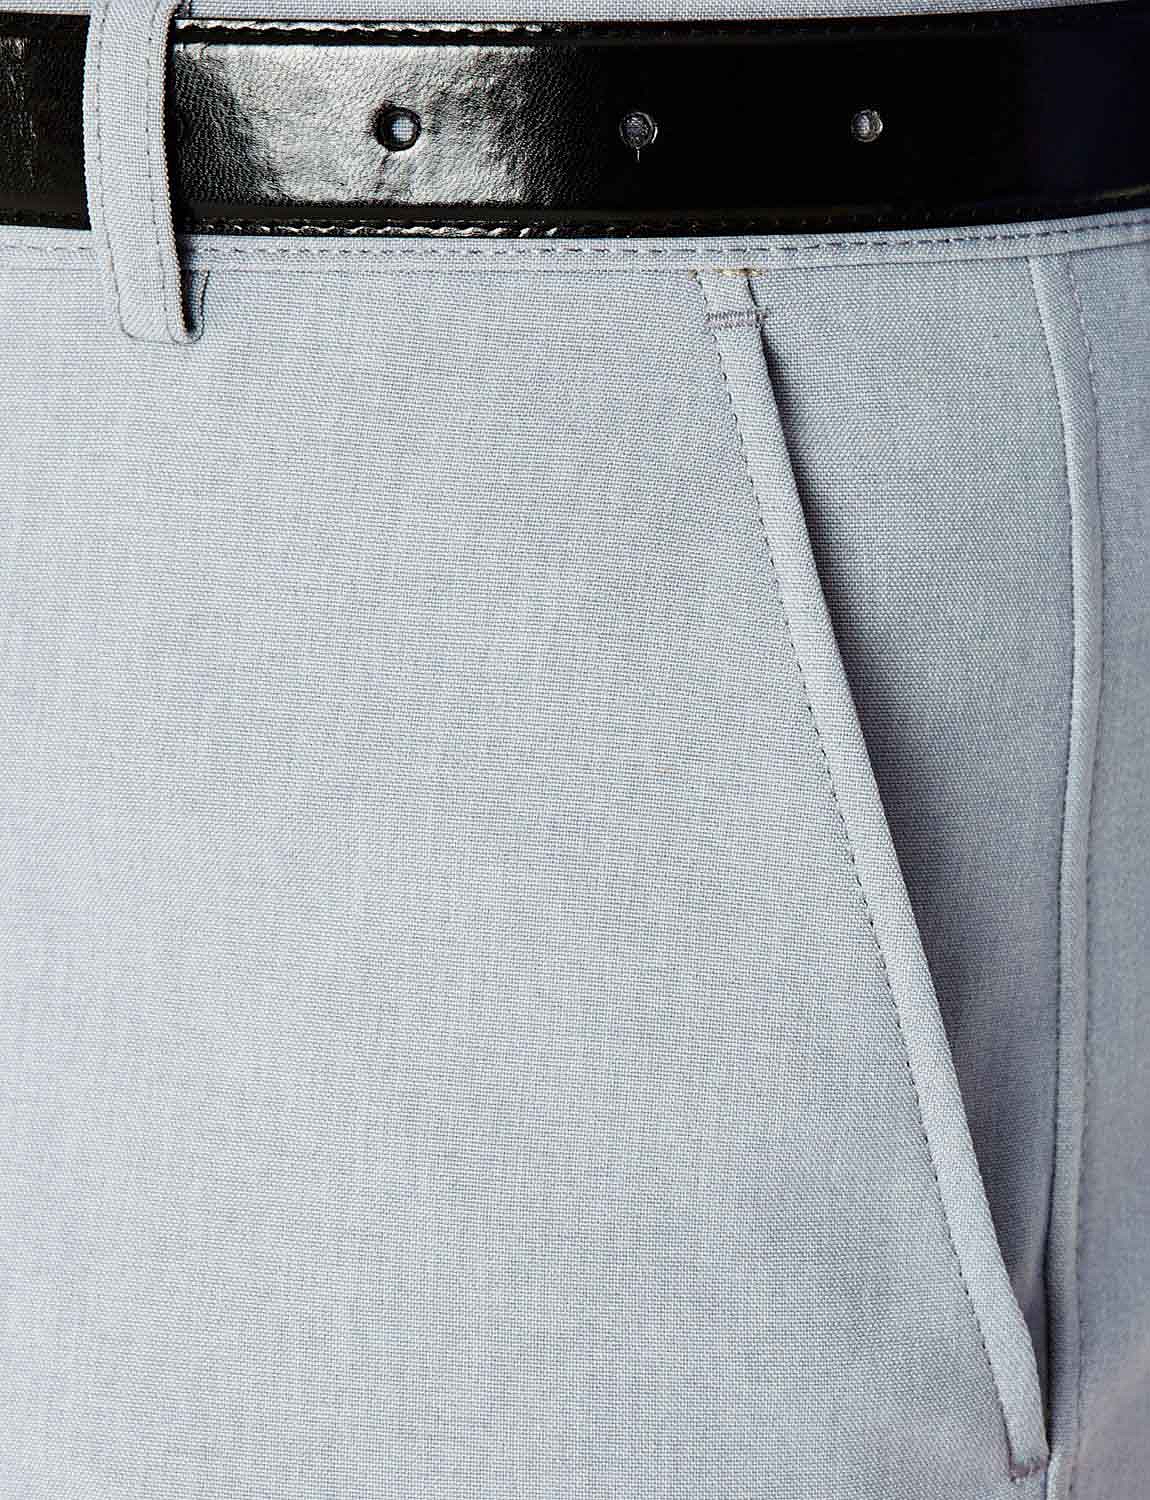 Farah Slant Pocket Trouser | Chums